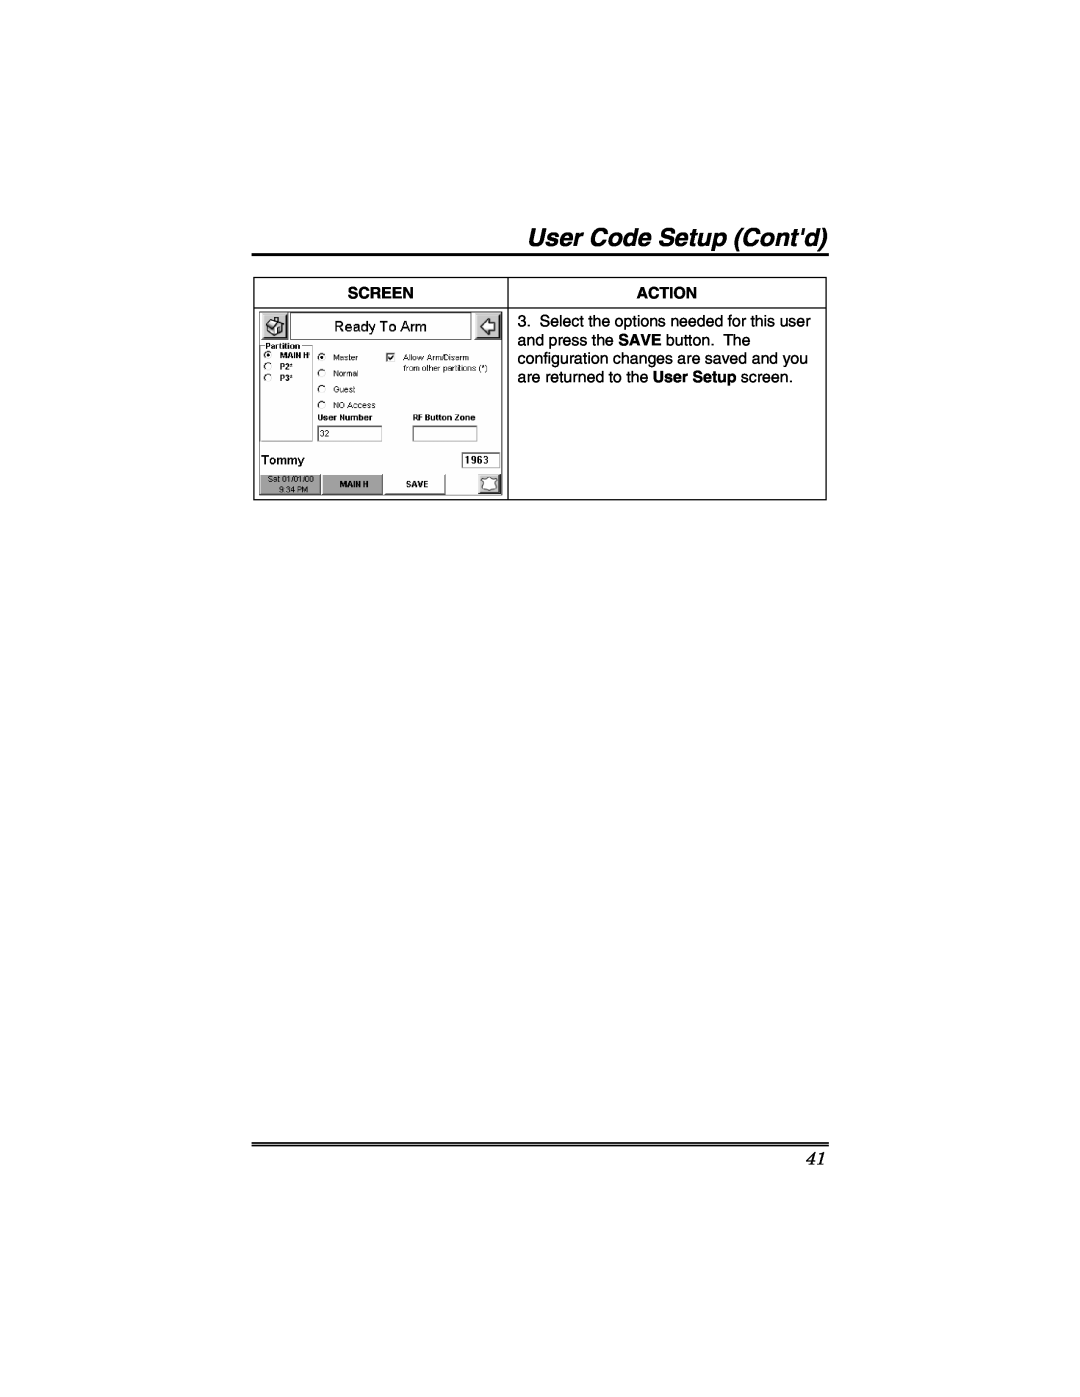 Honeywell 6271V manual User Code Setup Contd, Screen, Action 